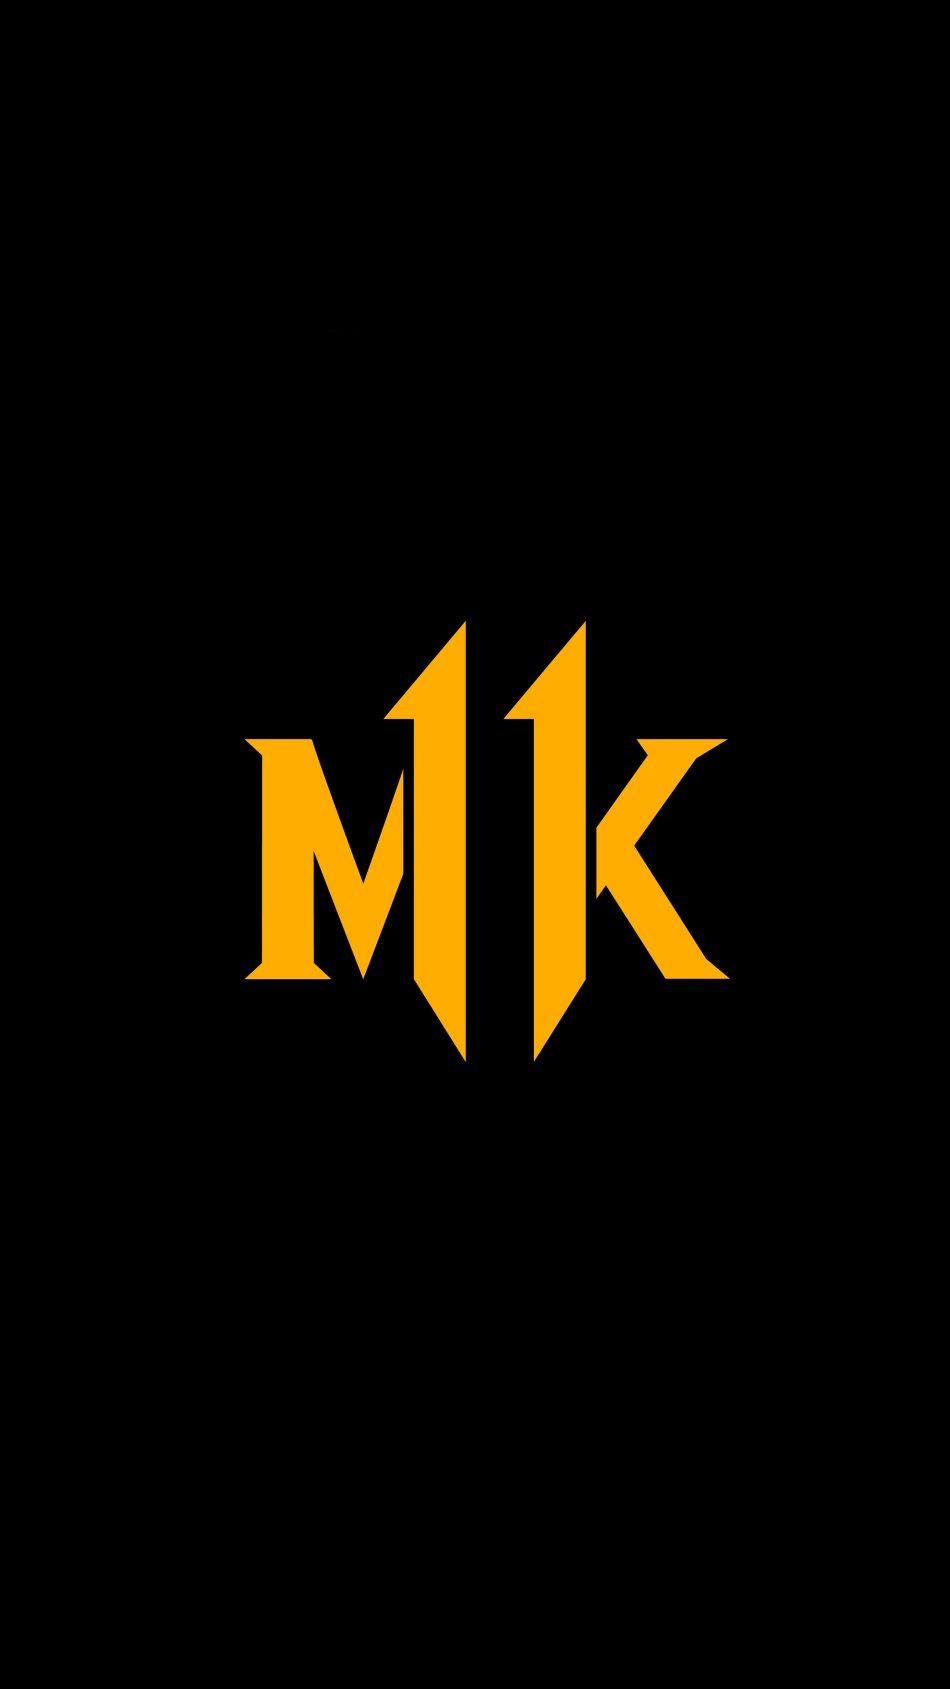 Download Mortal Kombat 11 Minimal Free Pure 4K Ultra HD Mobile Wallpaper